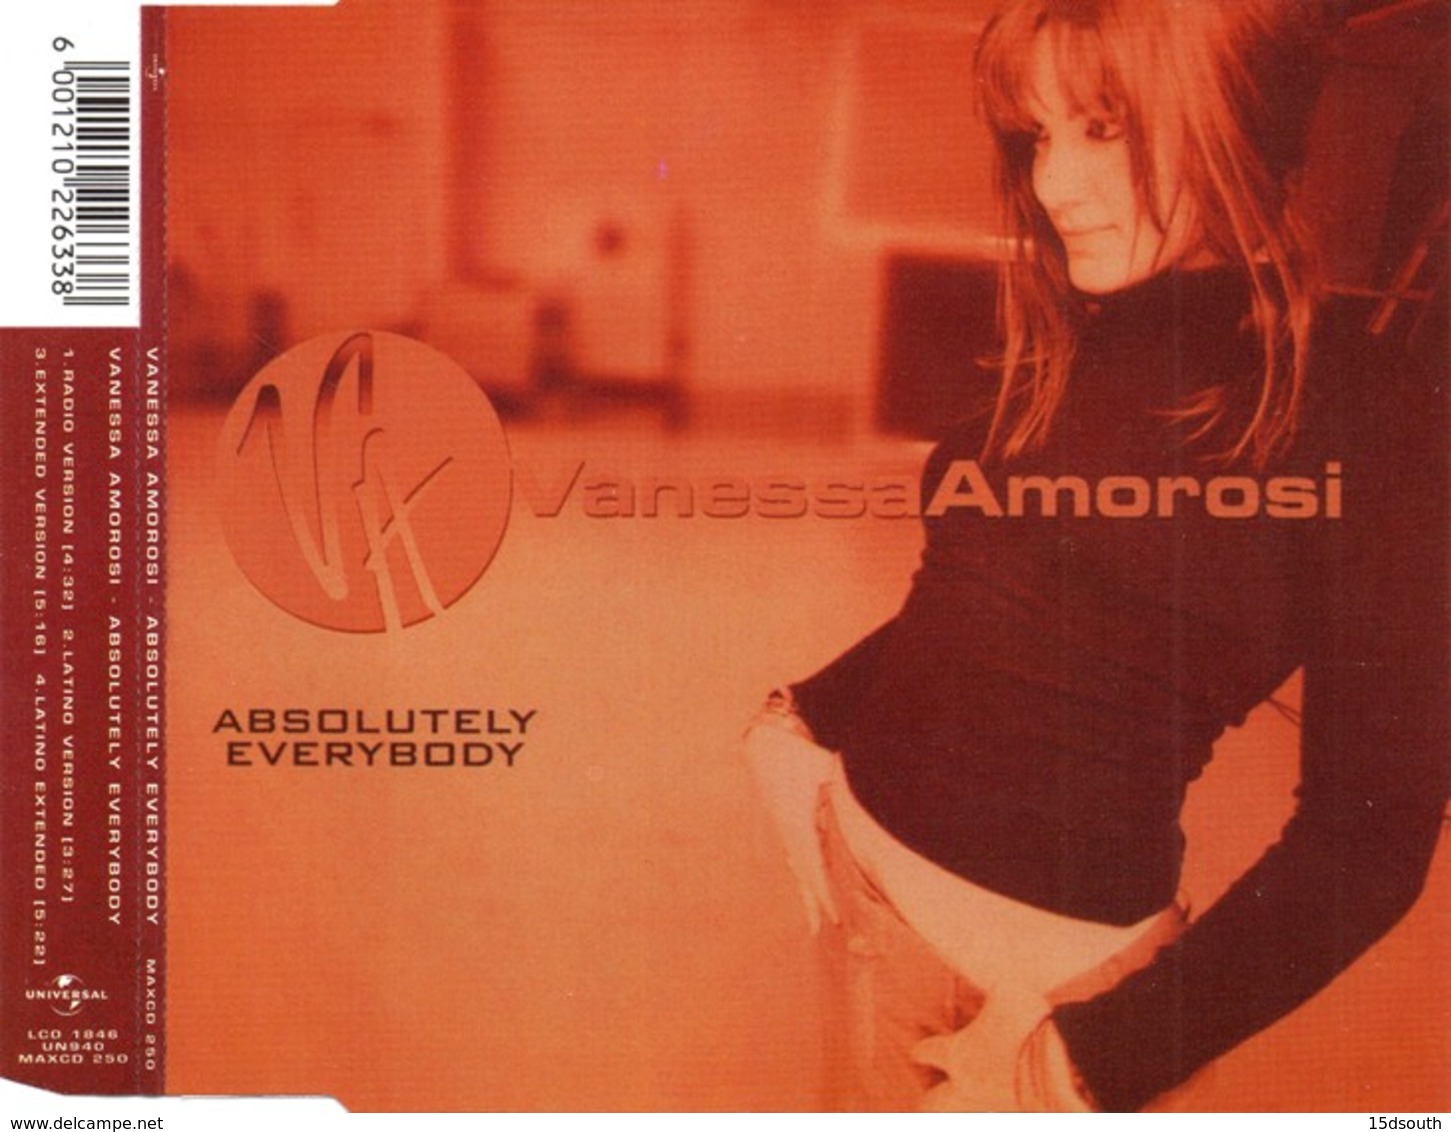 Vanessa Amorosi Absolutely Everybody Single CD - Dance, Techno & House